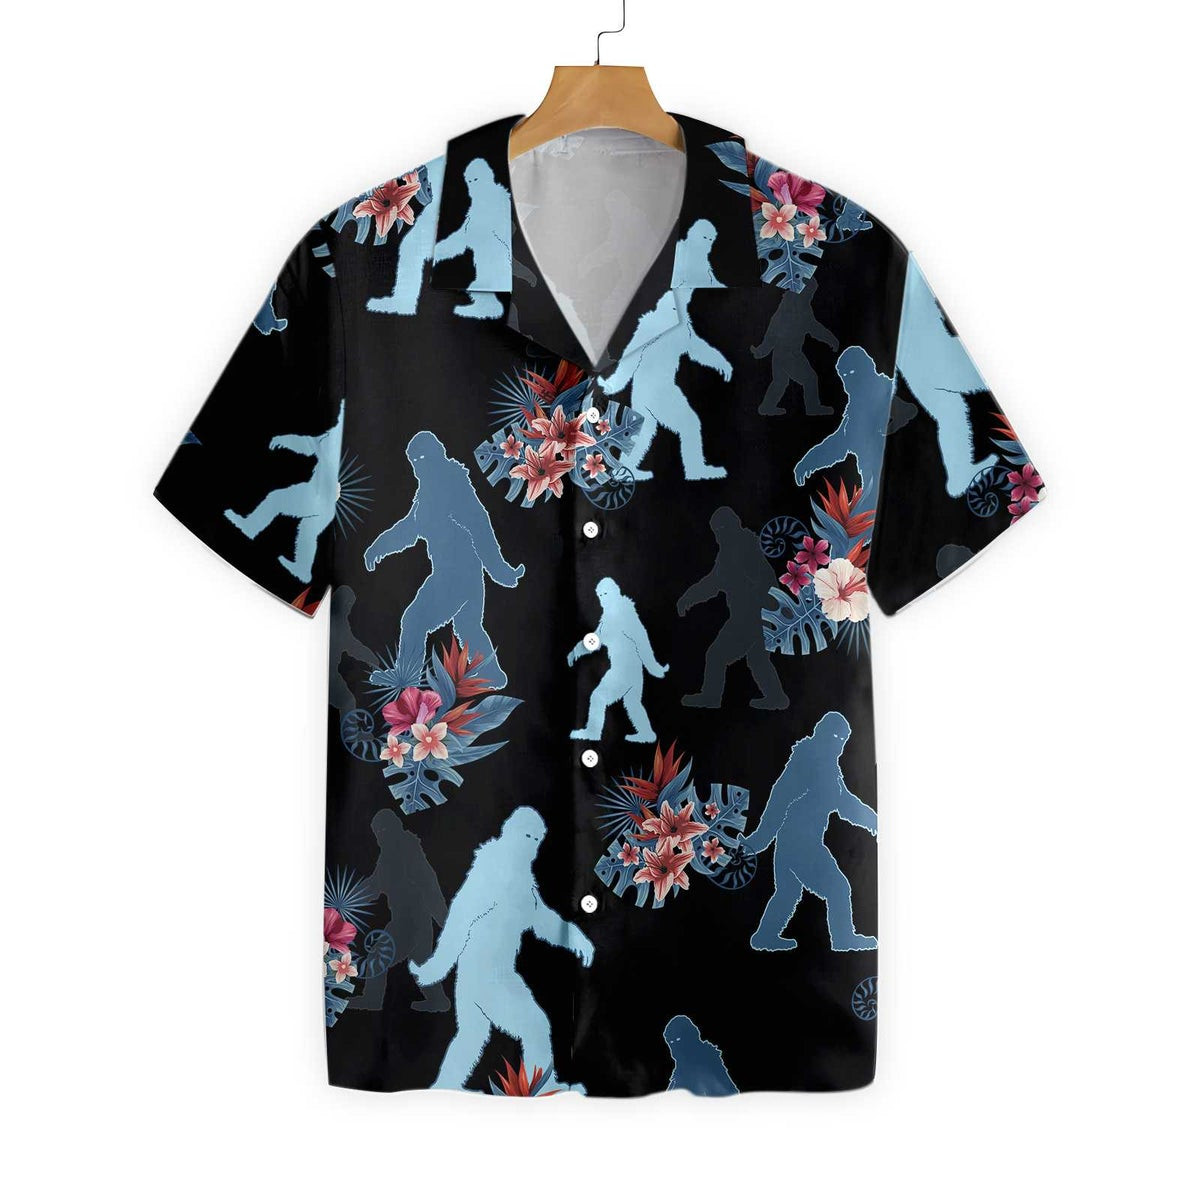 Bigfoot  The Tropical Leaves Bigfoot Hawaiian Shirt Black Tropical Floral Bigfoot Shirt For Men